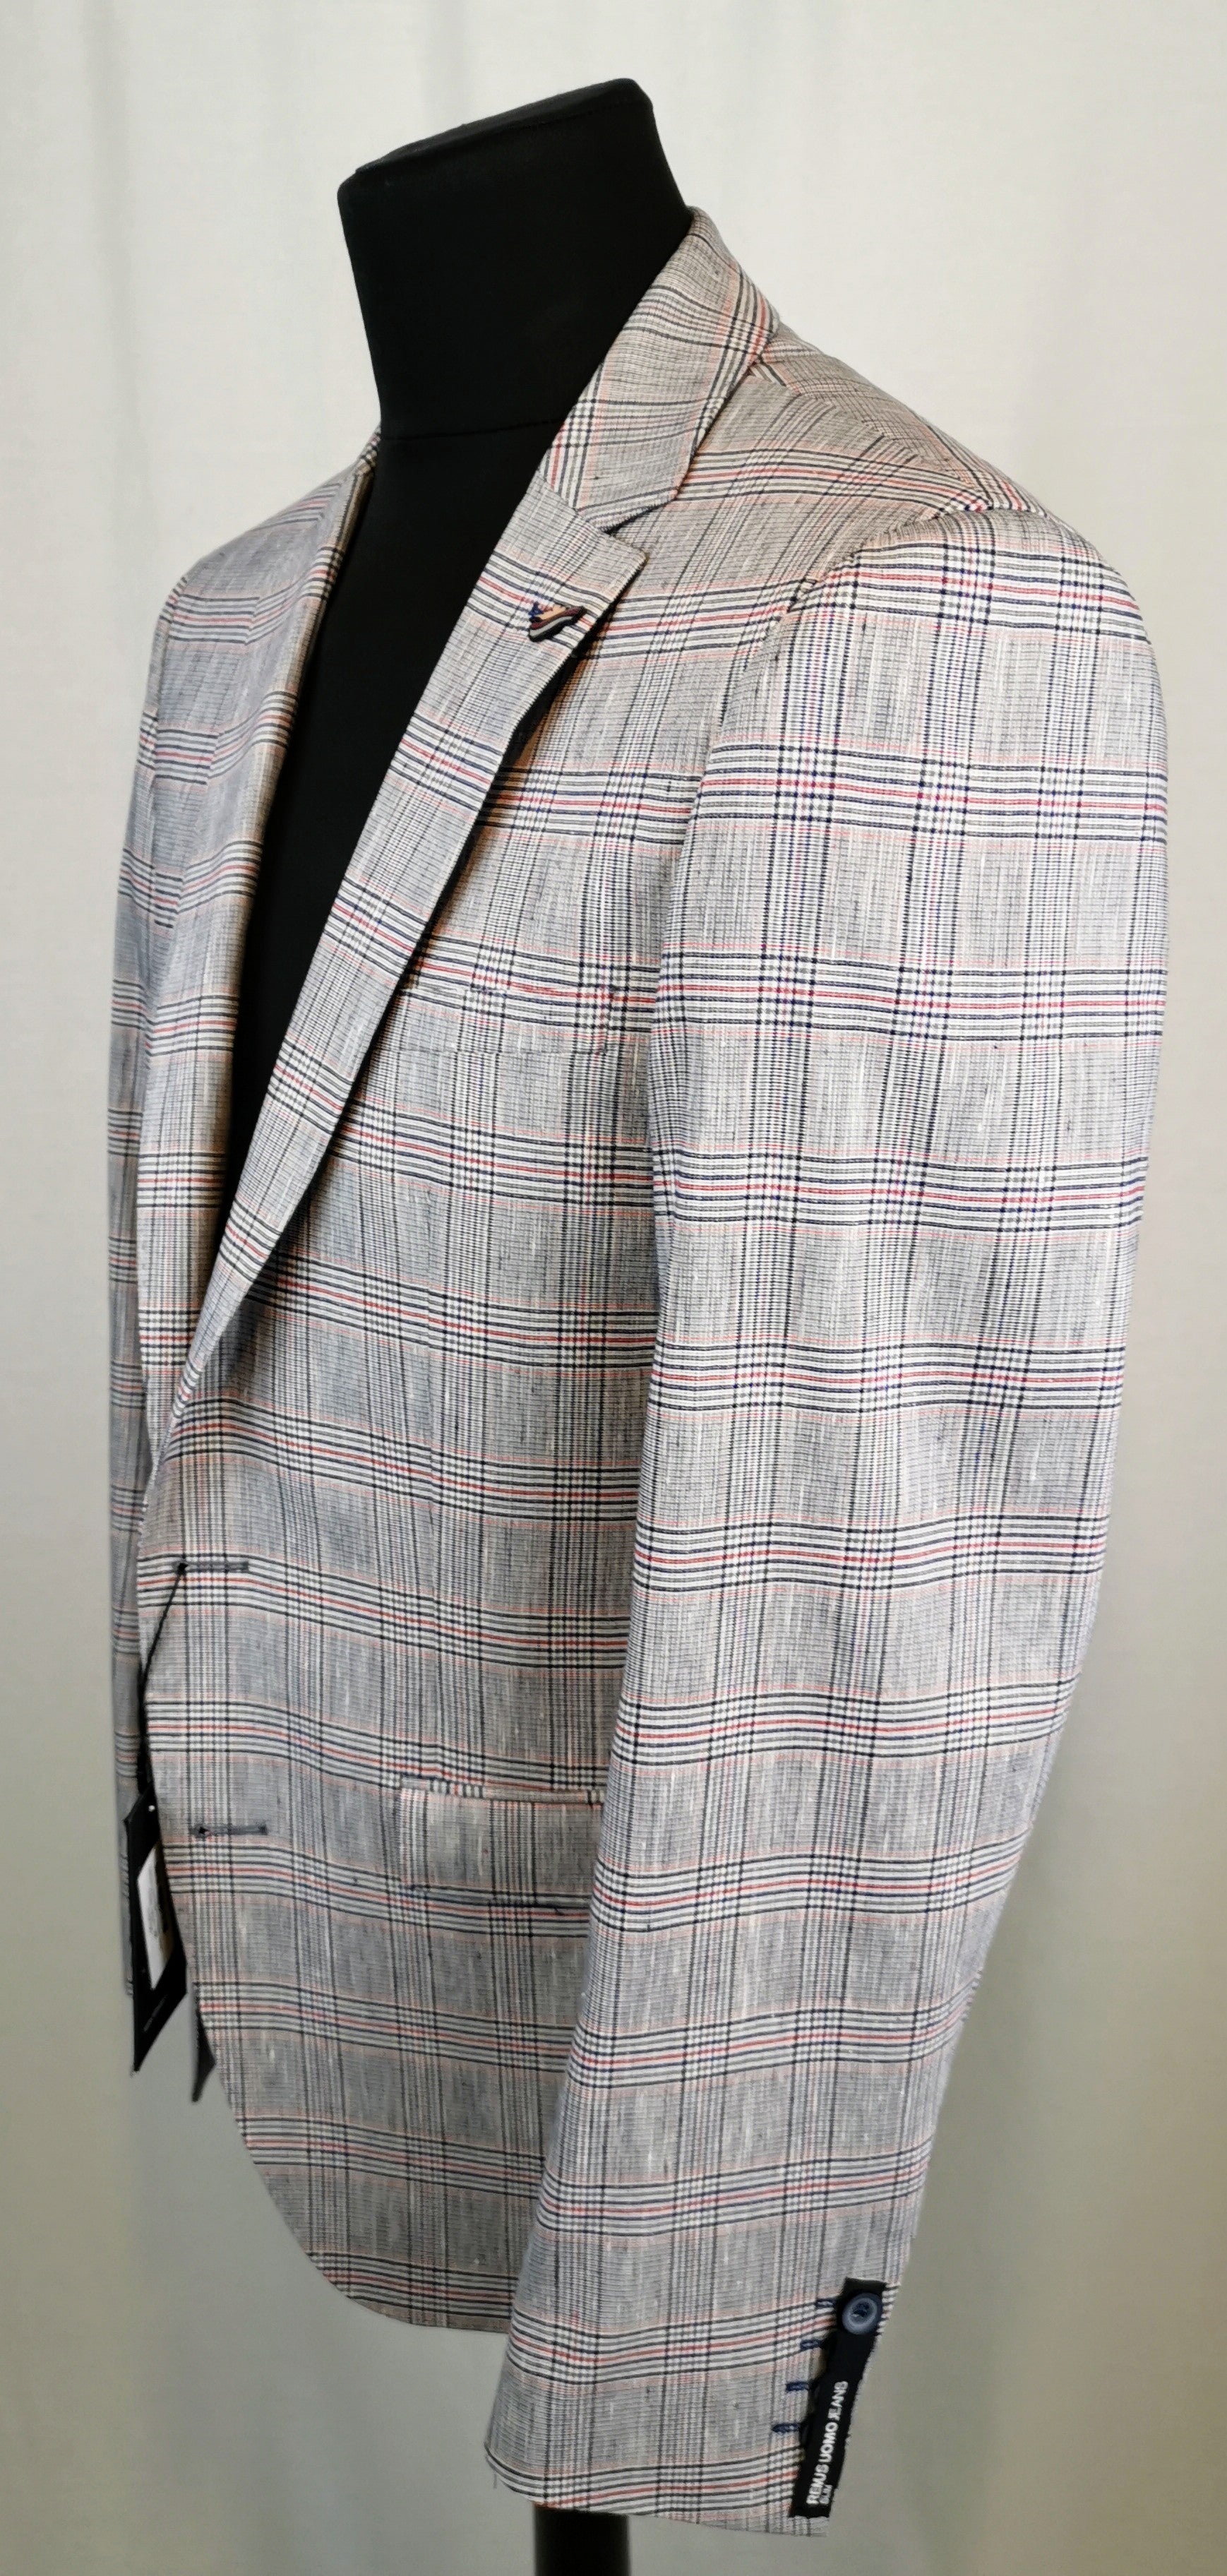 Remus Uomo Slim Fit linen blend Check Jacket